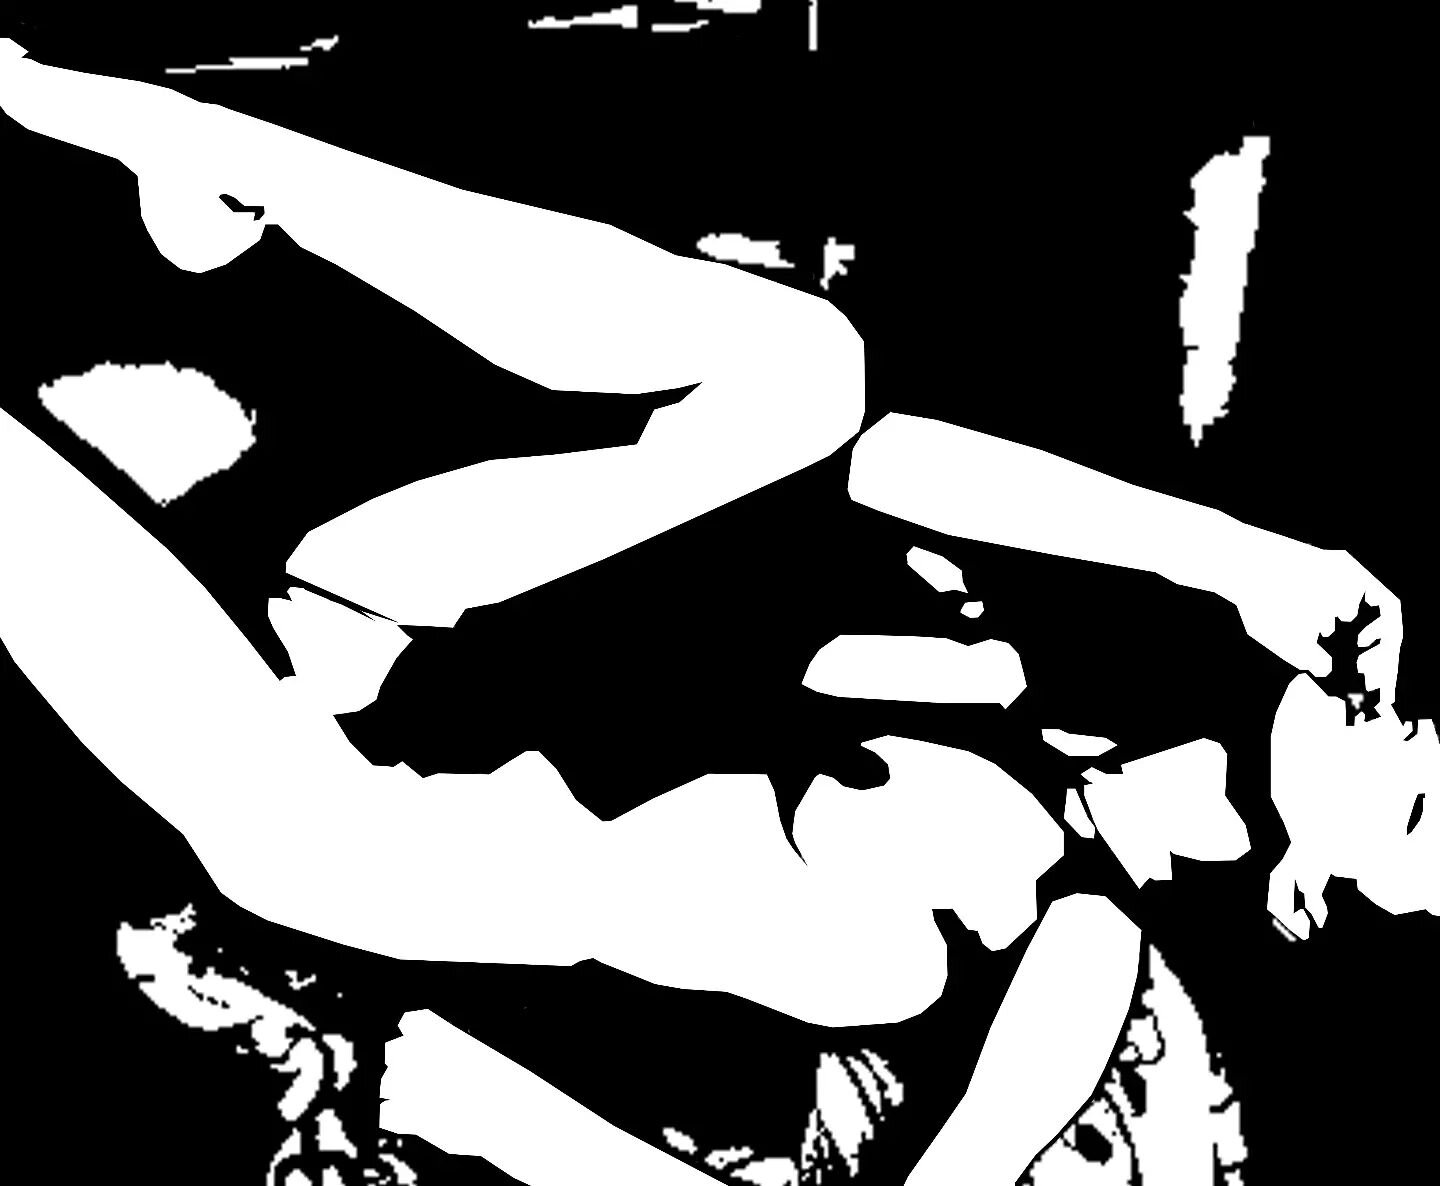 ... 
.
#eroticart #eroticarts #eroticillustration #digitalillustration #stencilart #stencil #blackandwhiteart #blackandwhite #blackheart #dreamstate #boudoirphotography #eroticartmag #eroticartist #highcontrast #midnightmemories #neonoir #noiraesthet